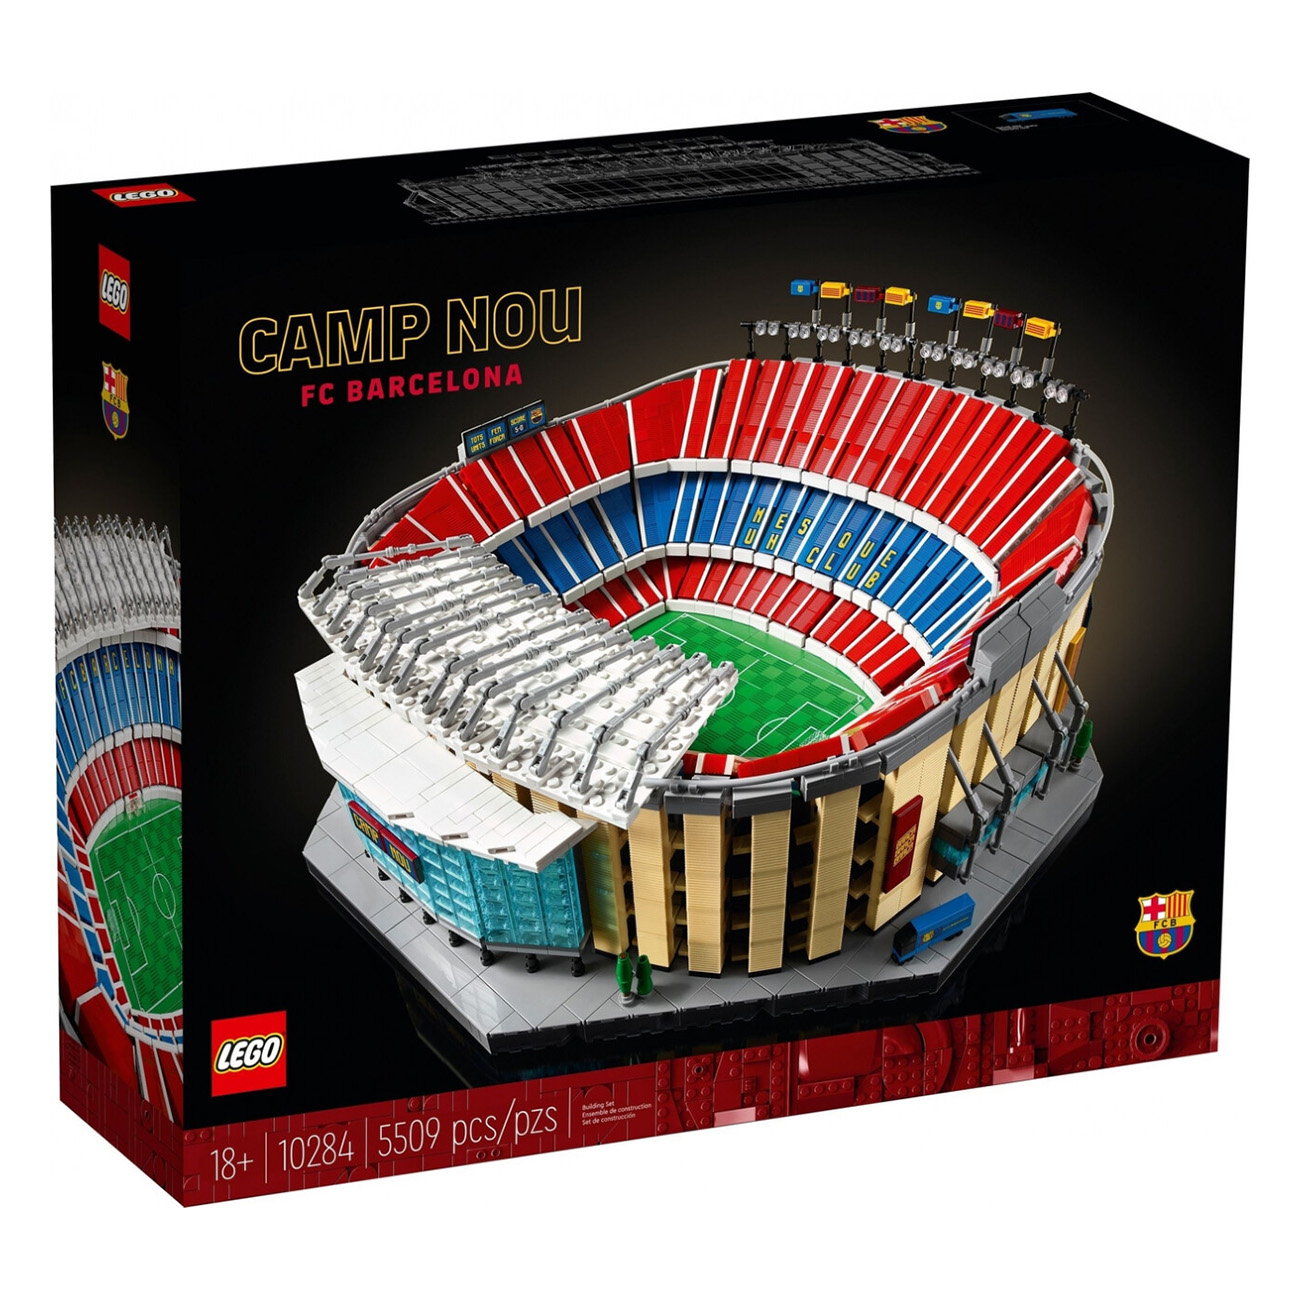 - Camp Nou FC Barcelona Spielbausteine 10284 LEGO